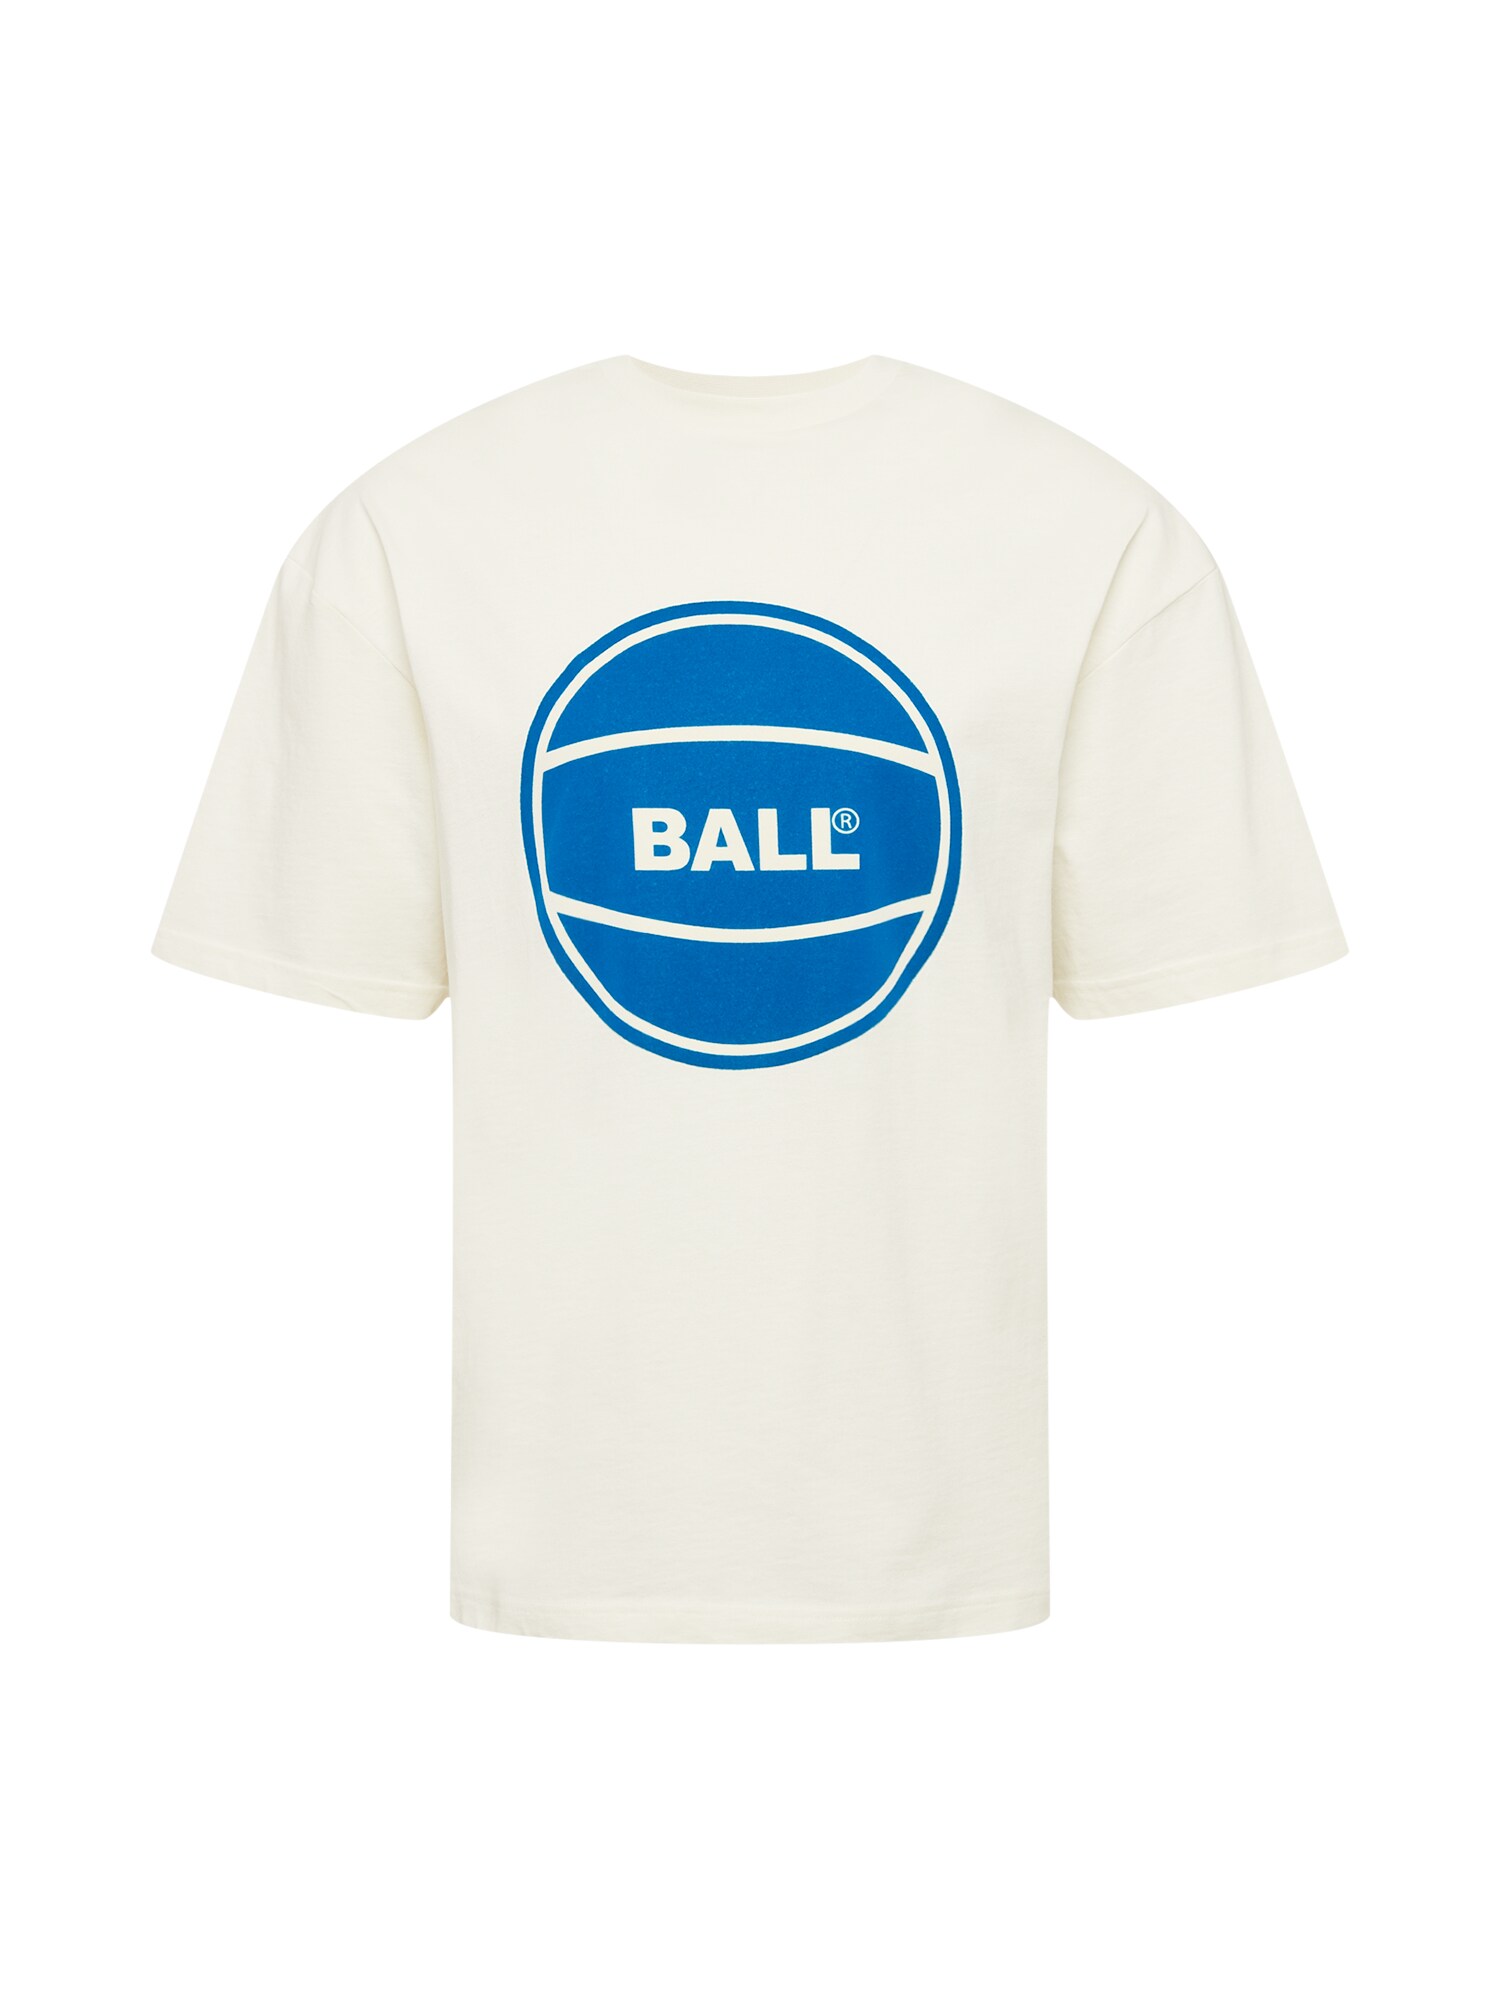 Ball Marškinėliai balta / mėlyna